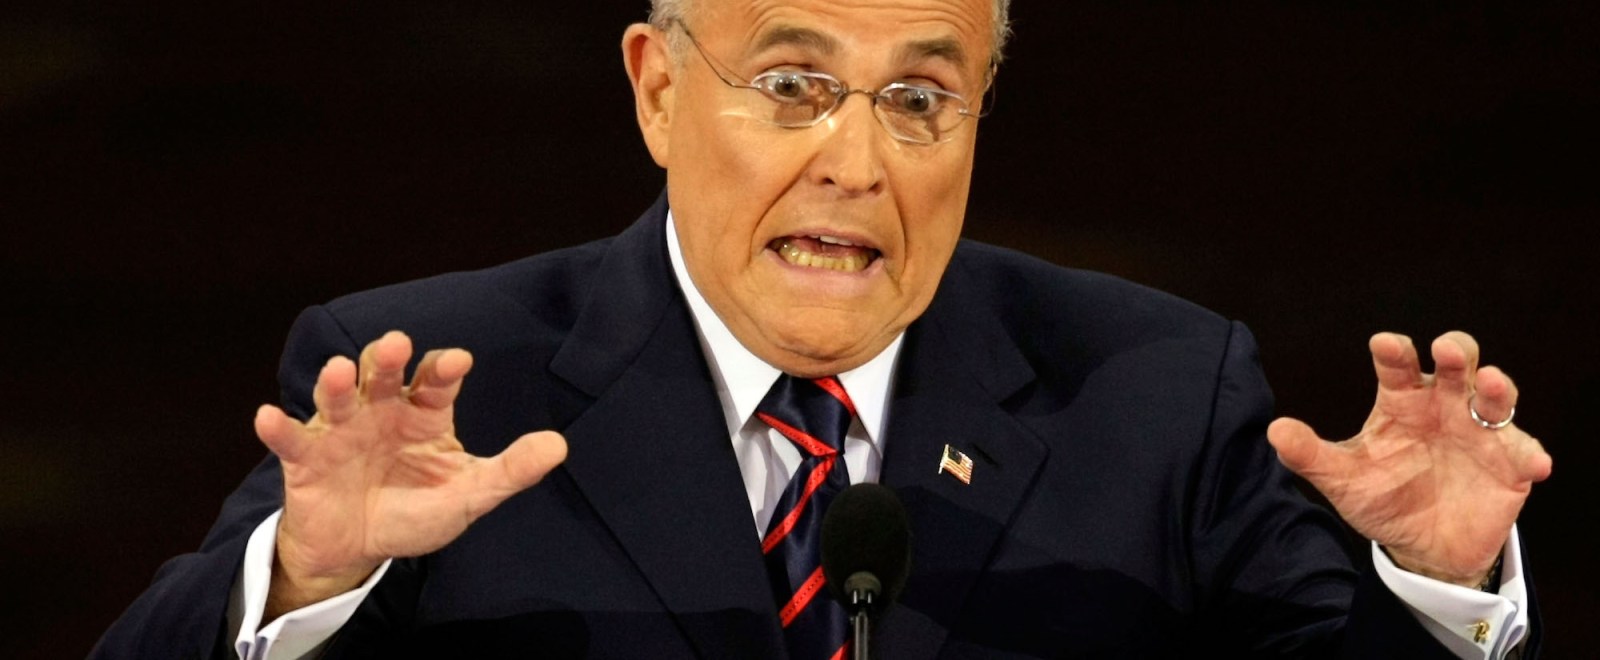 Rudy Giuliani at the 2008 RNC